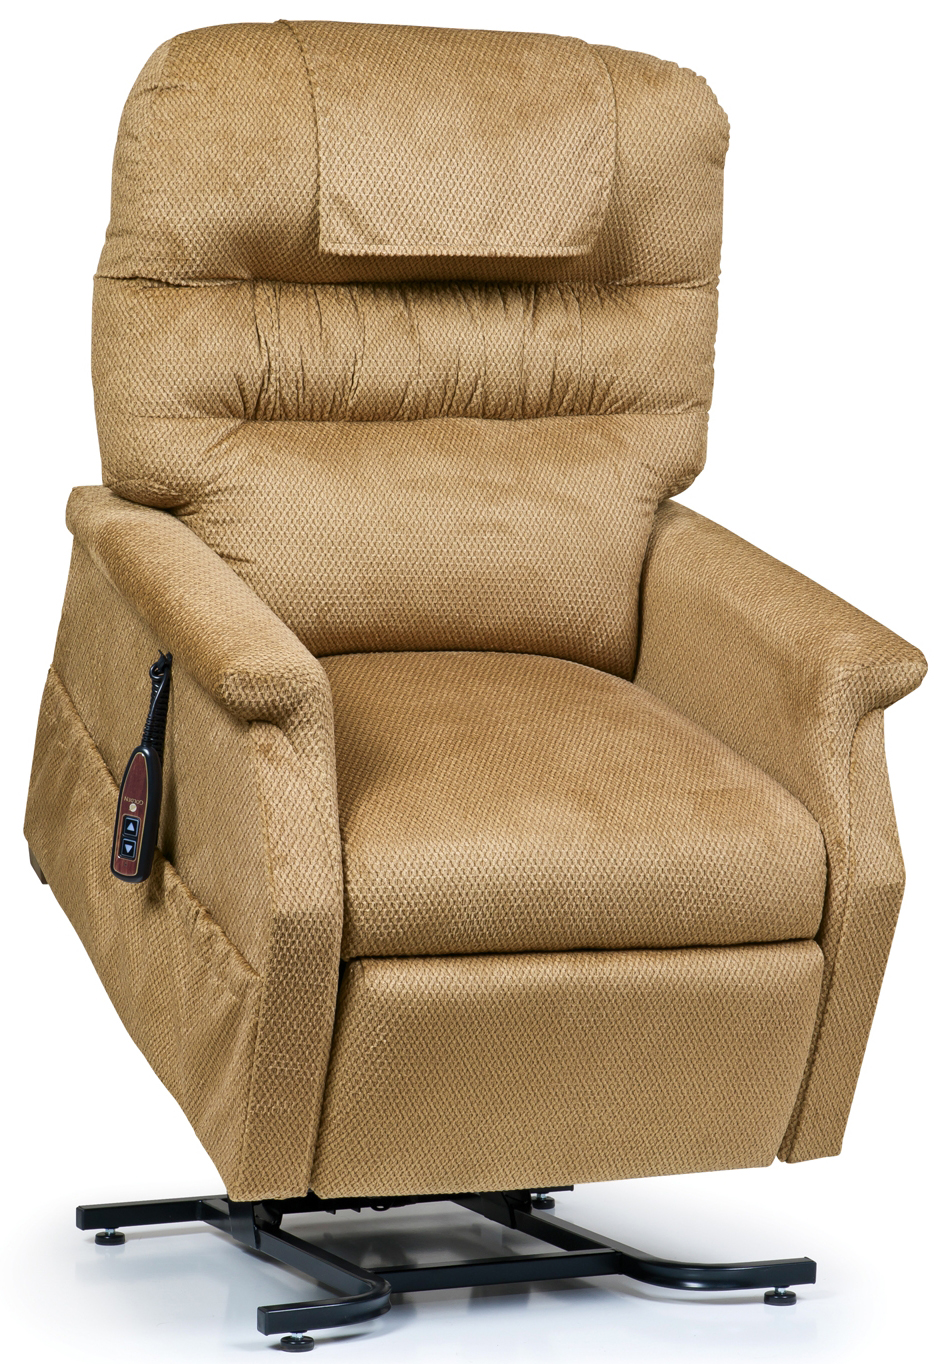 Photo of Golden Technologies Monarch Lift Chair, Size Medium